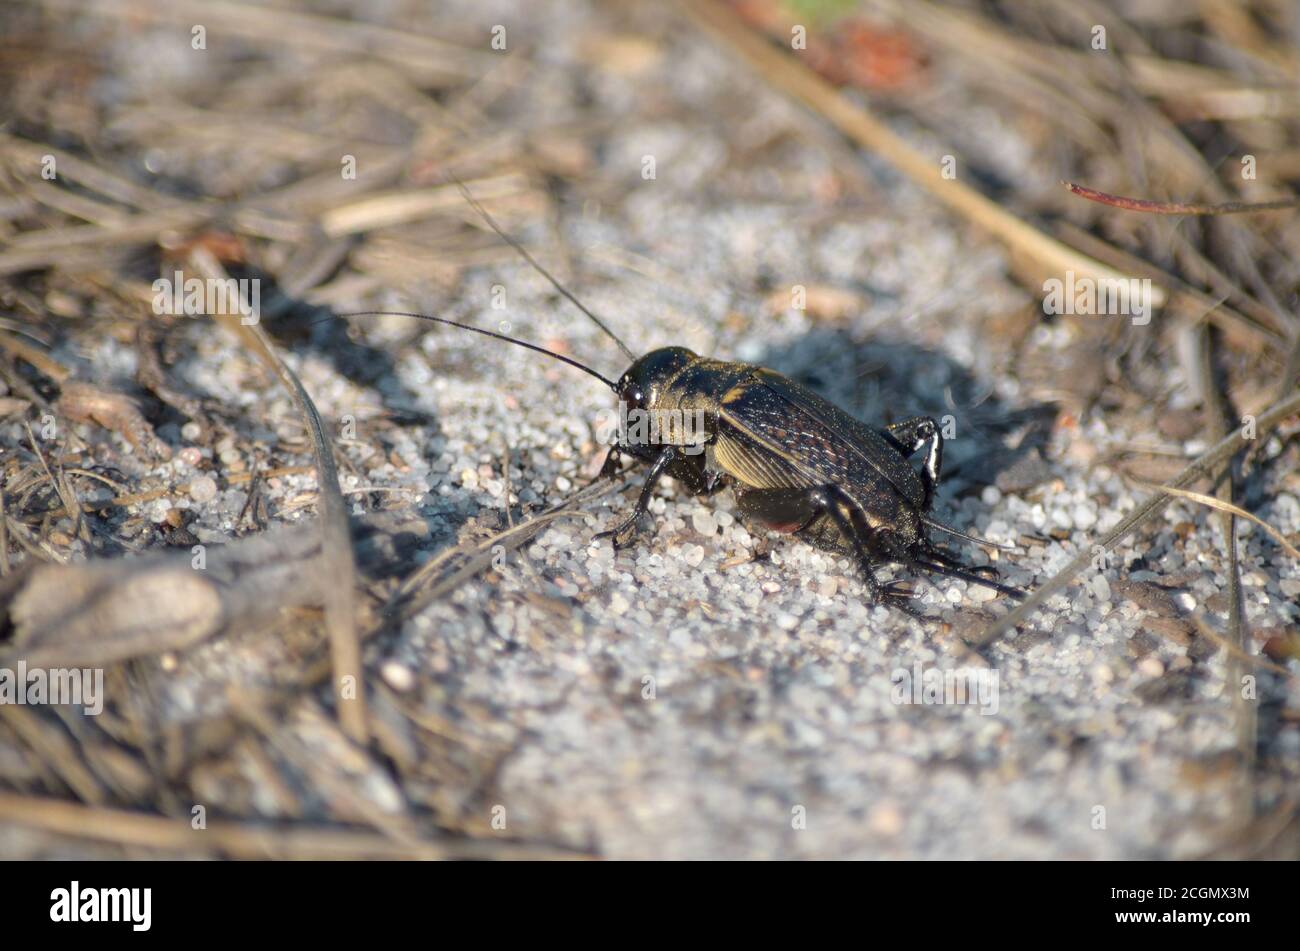 Gryllus campestris. Field cricket in its natural habitat. Fauna of Ukraine. Shallow depth of field, closeup. Stock Photo